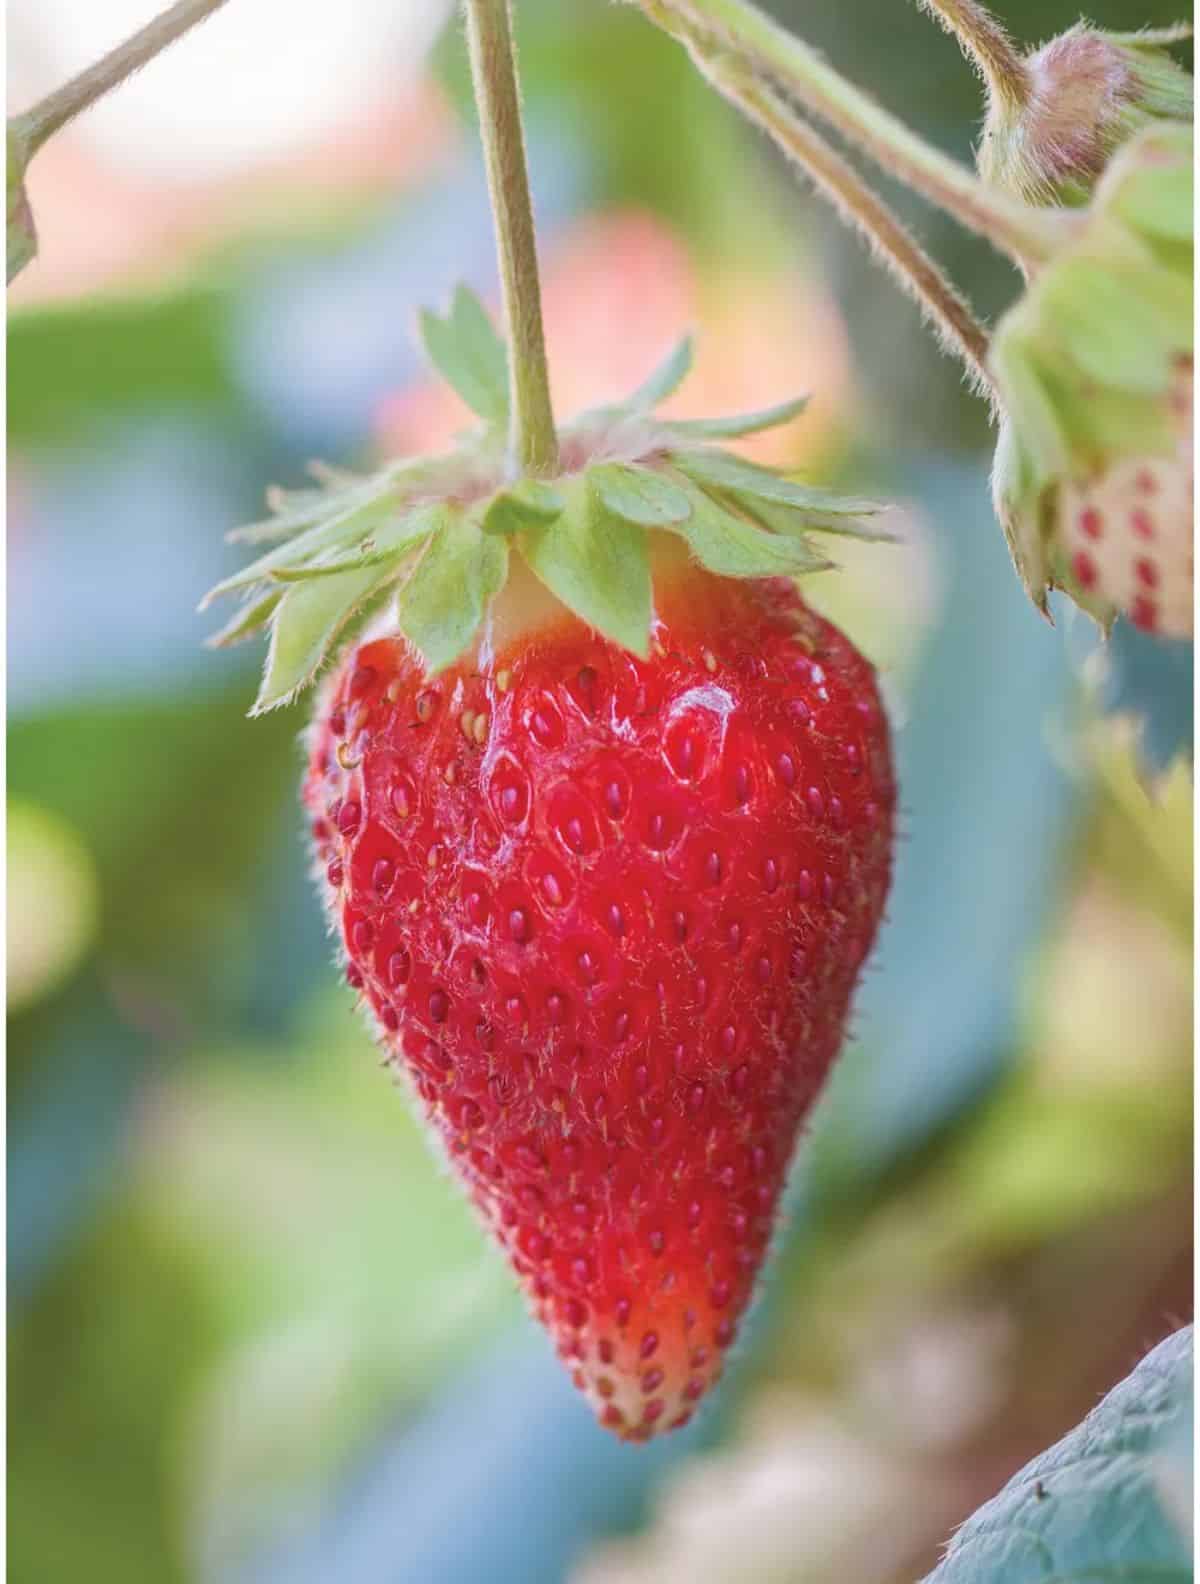 RIpe toscana strawberry fruit on a stem close-up.